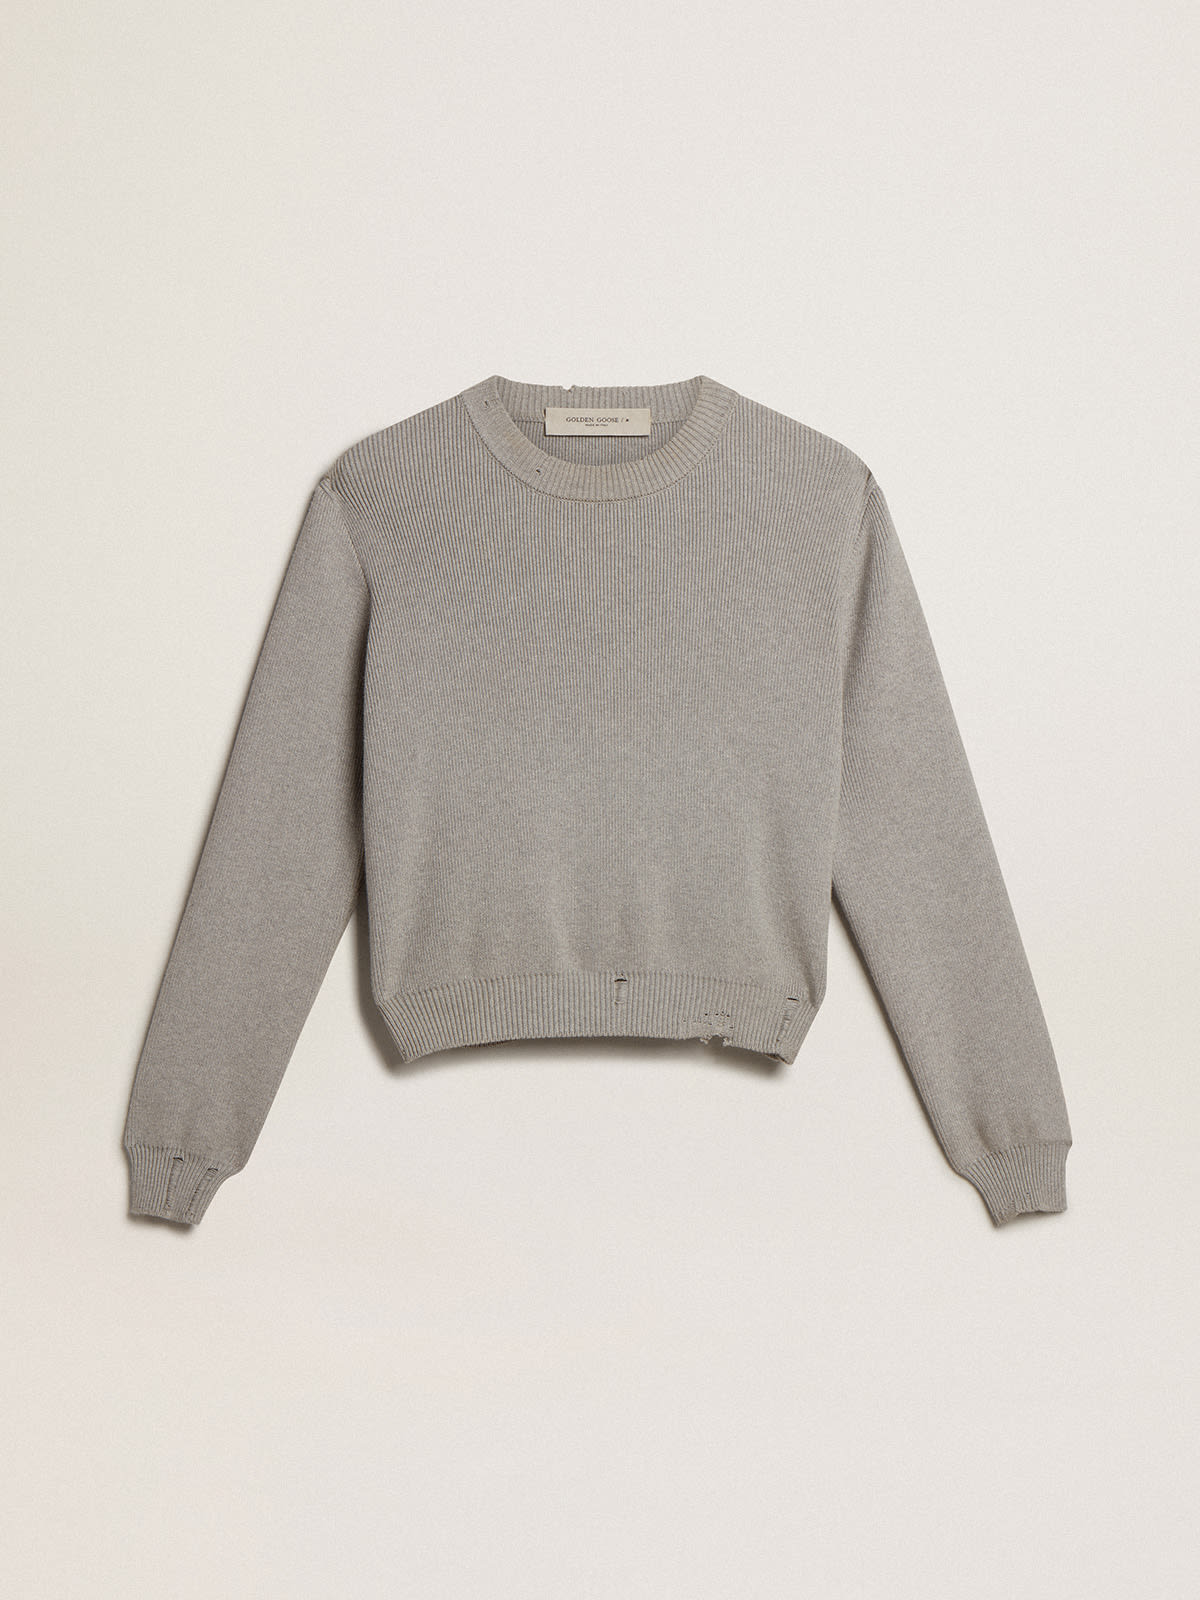 Golden Goose - Women's round-neck sweater in gray cotton in 